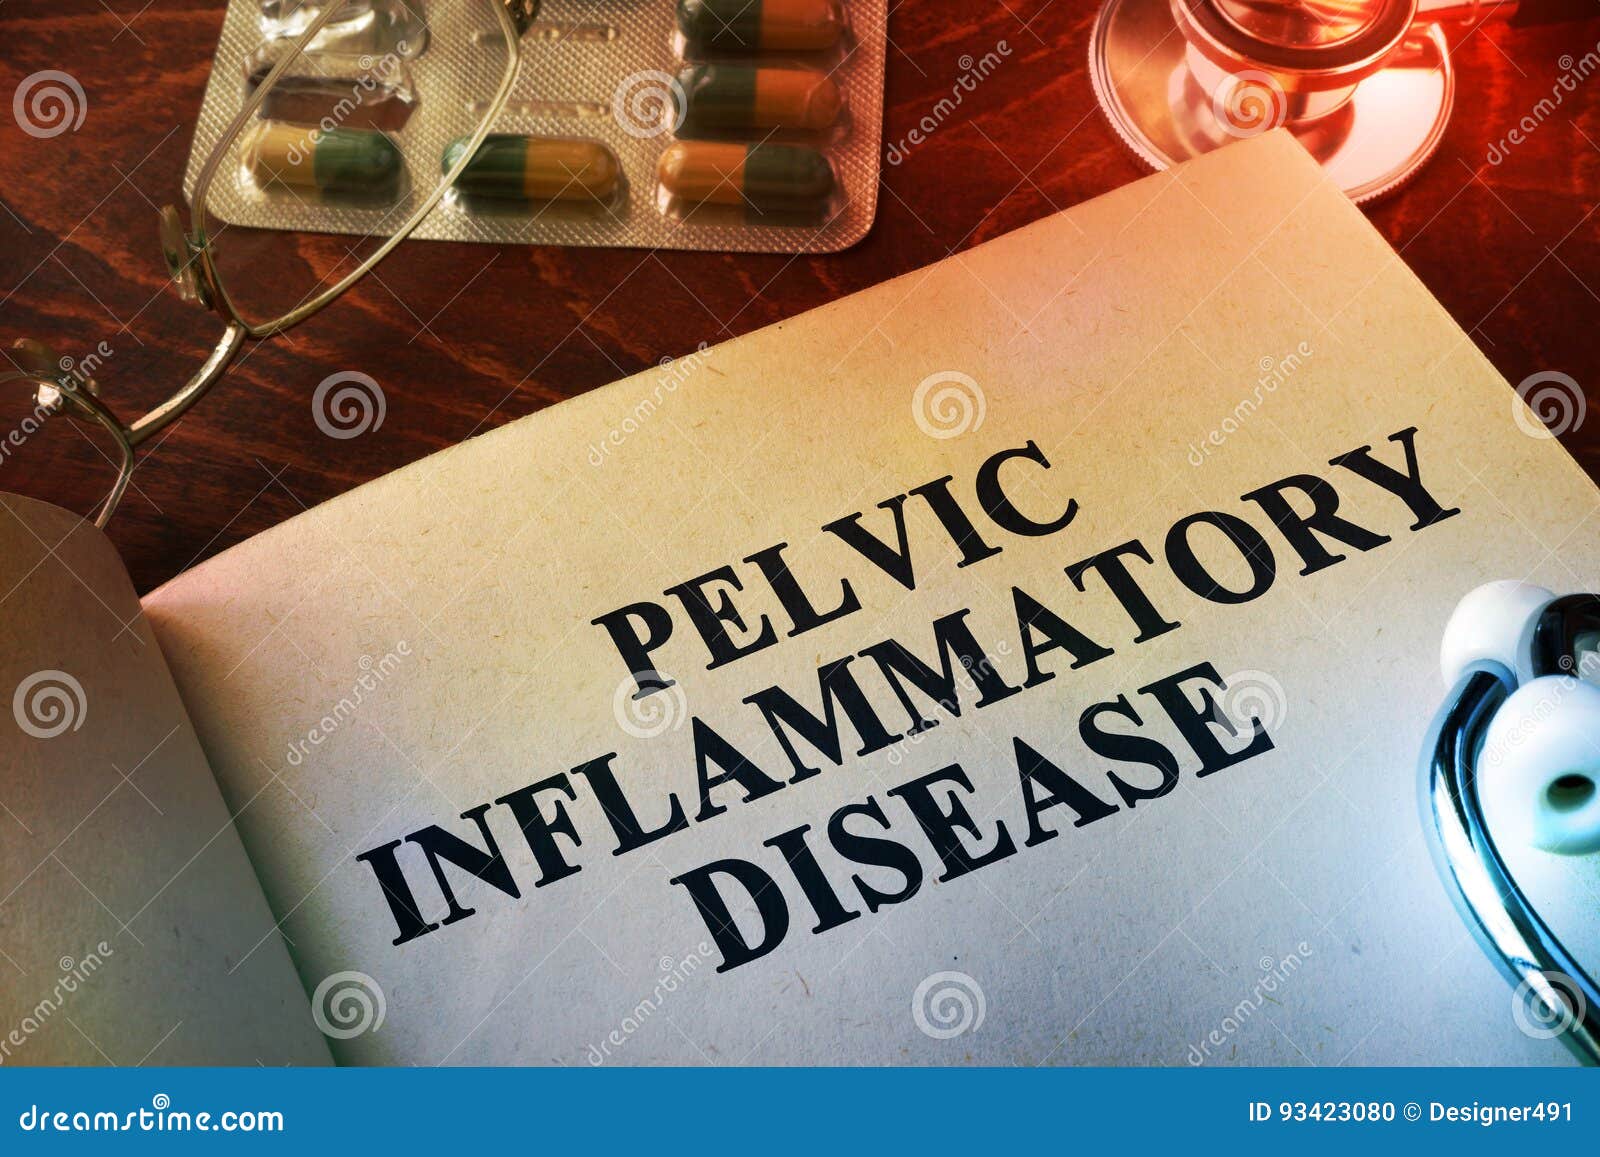 pelvic inflammatory disease pid.